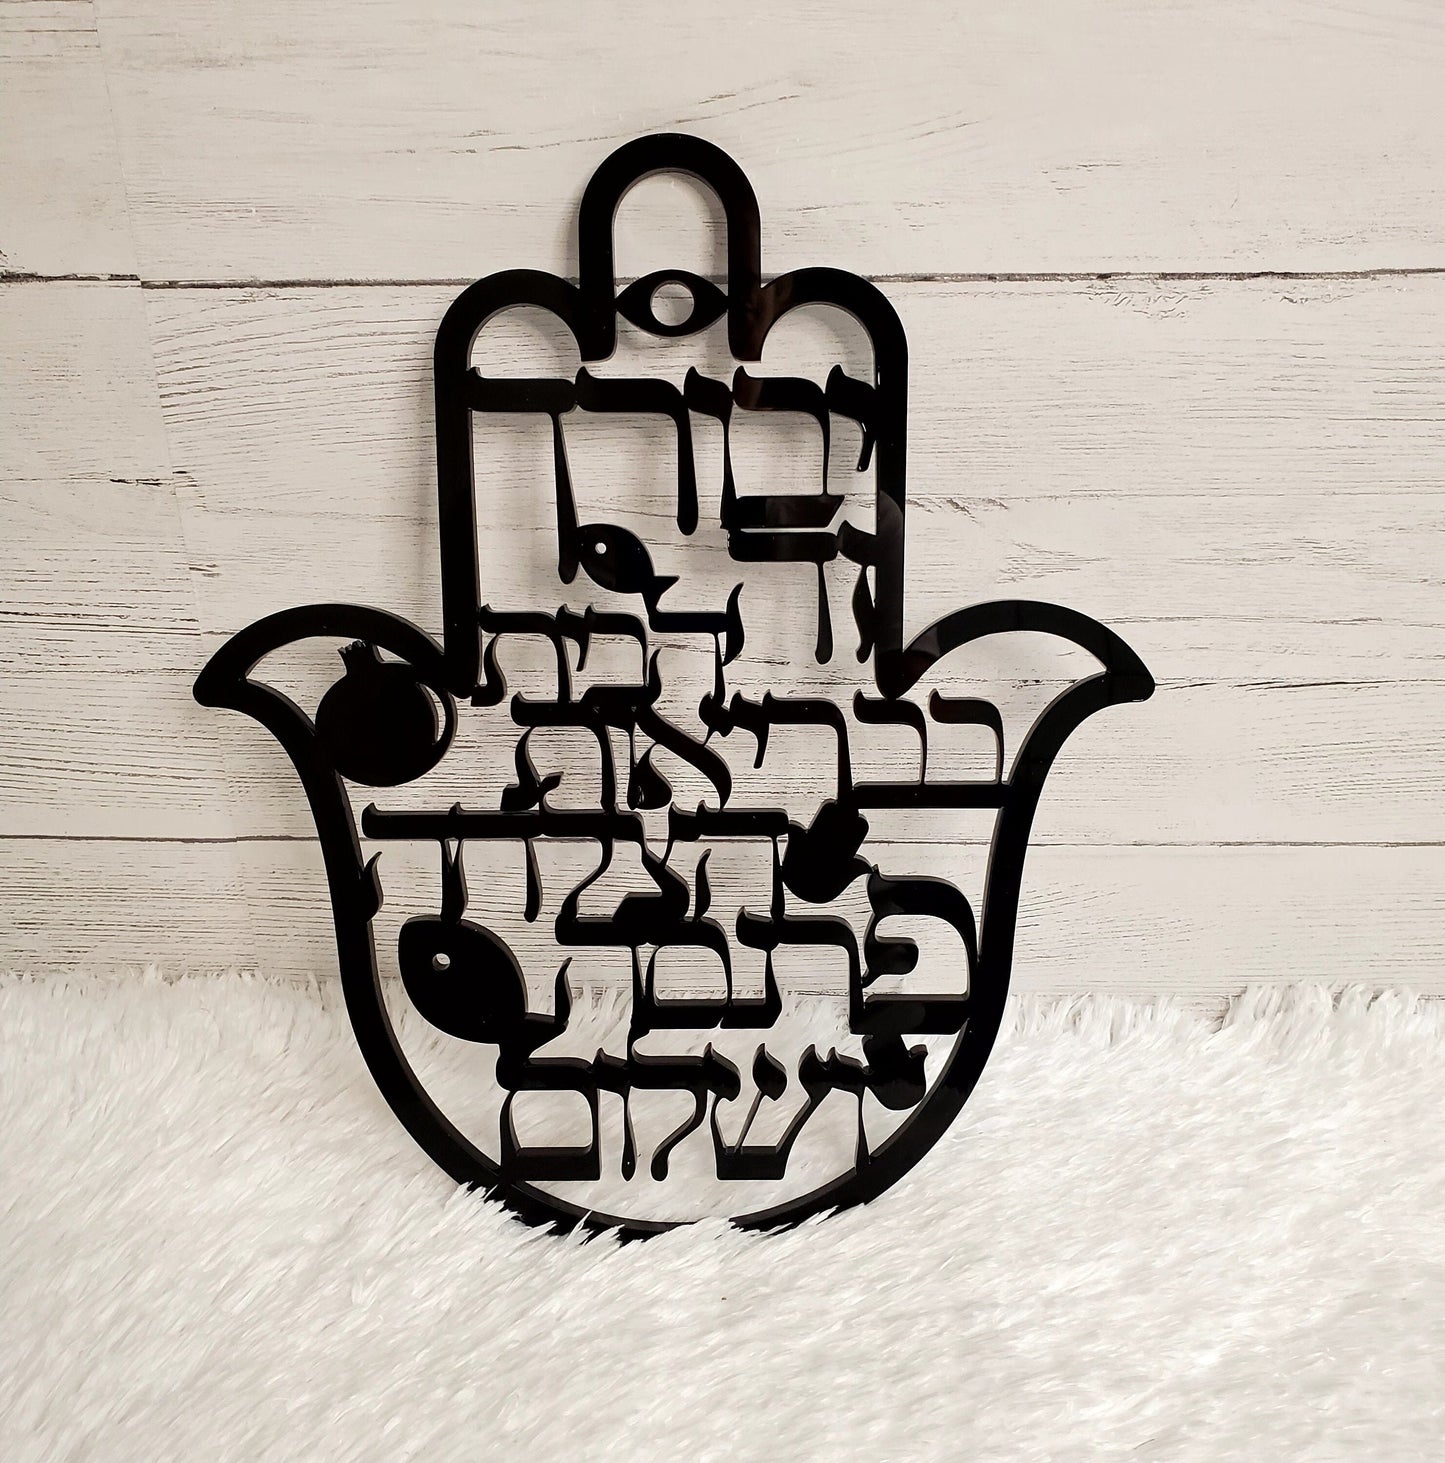 Birkat Habait, House Blesing,Jewish house blessing.